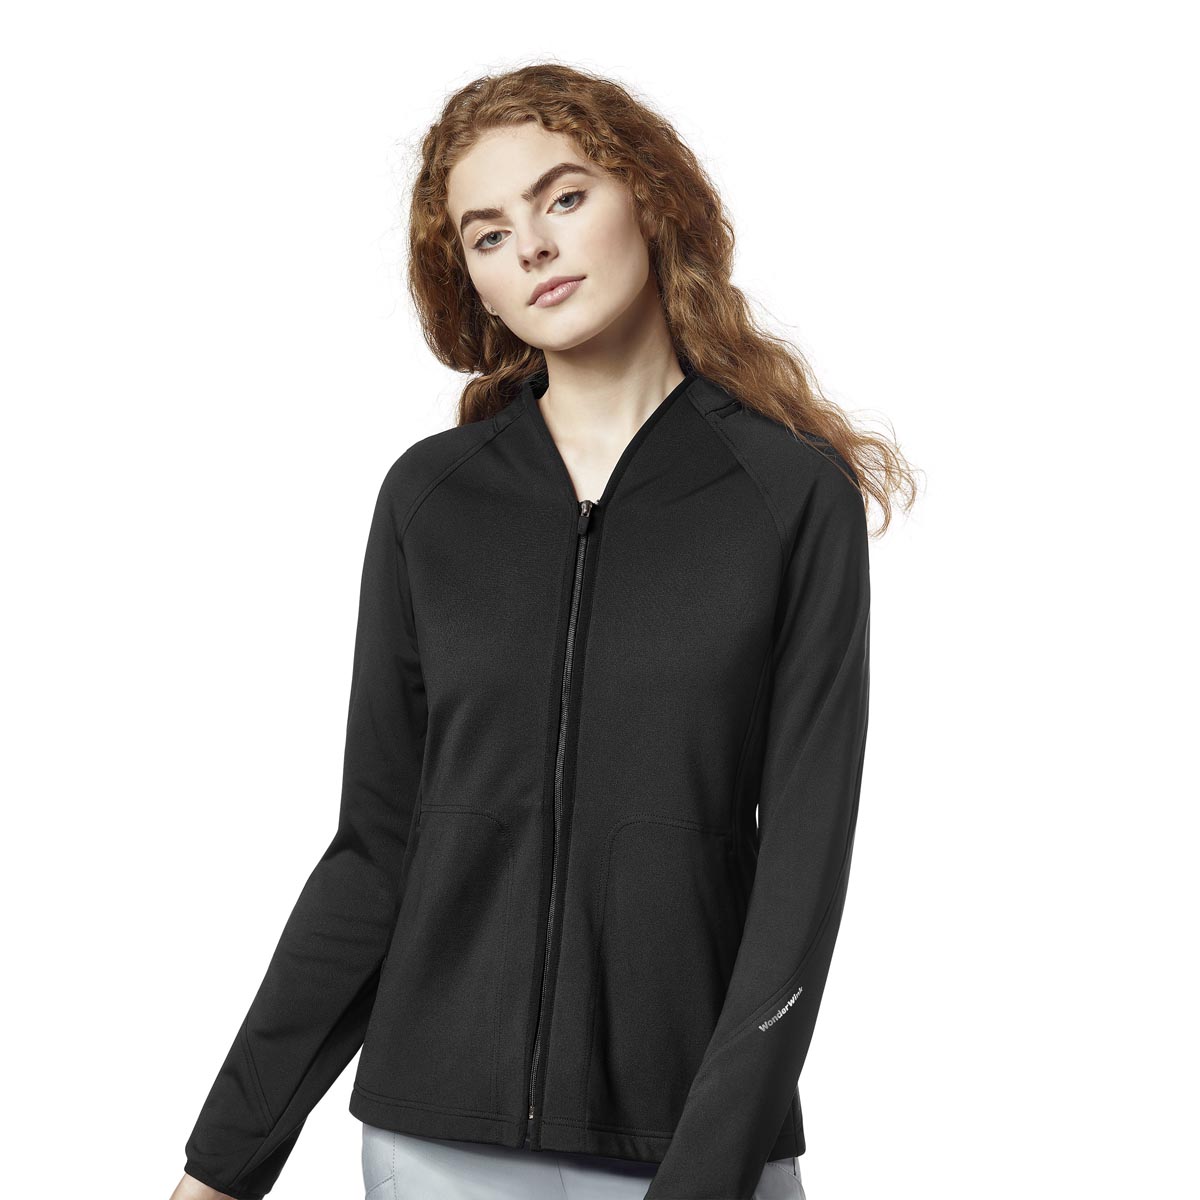 Wink Scrubs Women's Fleece Full Zip Jacket Extended Sizes